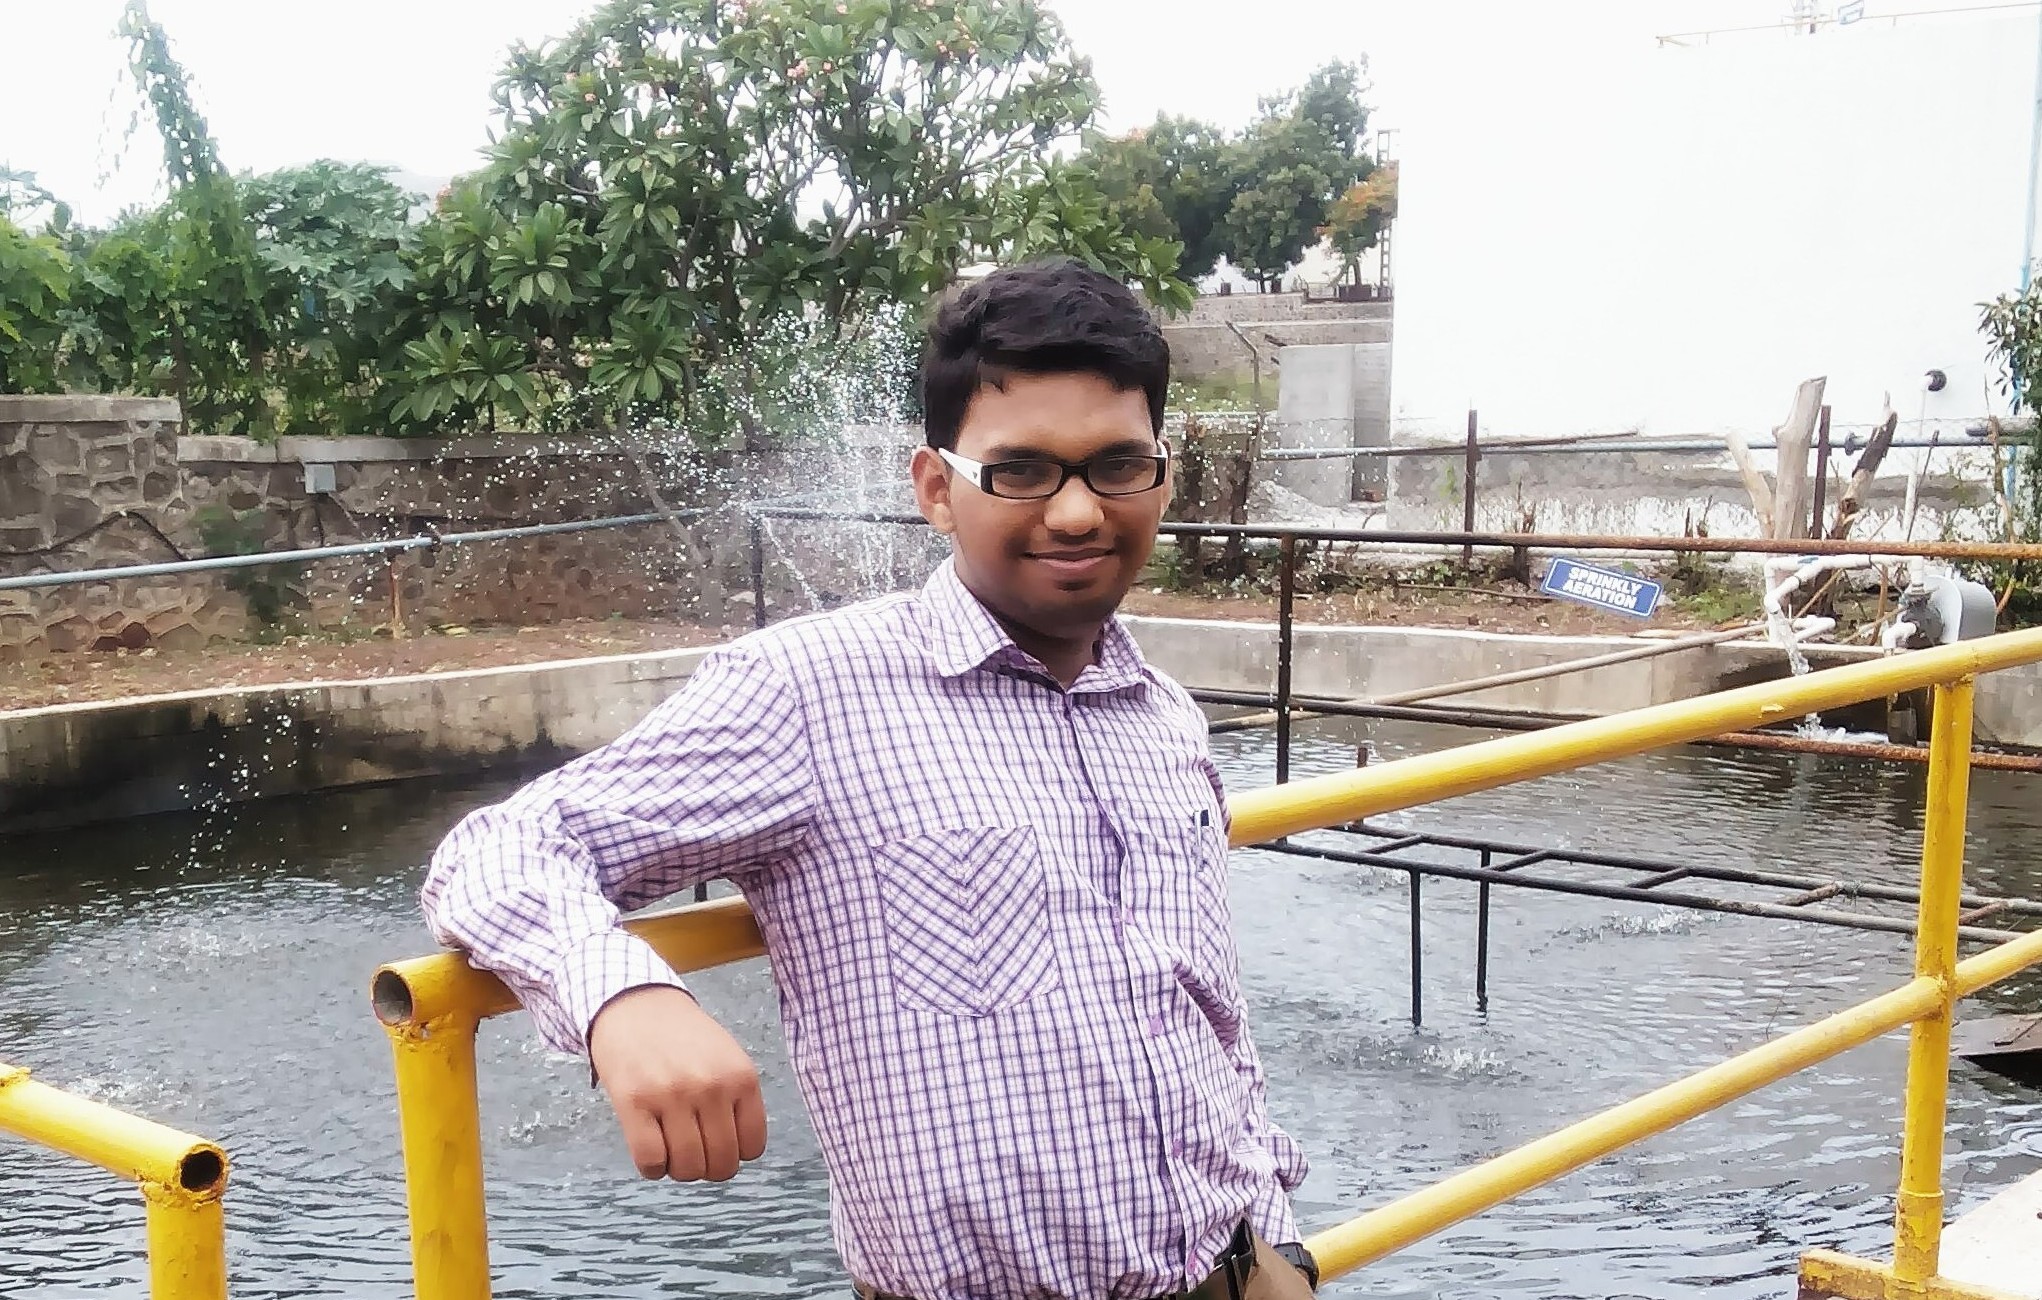 Internship at Lawkim Motors, Godrej – Malhar from D.Y. Patil College of Engineering